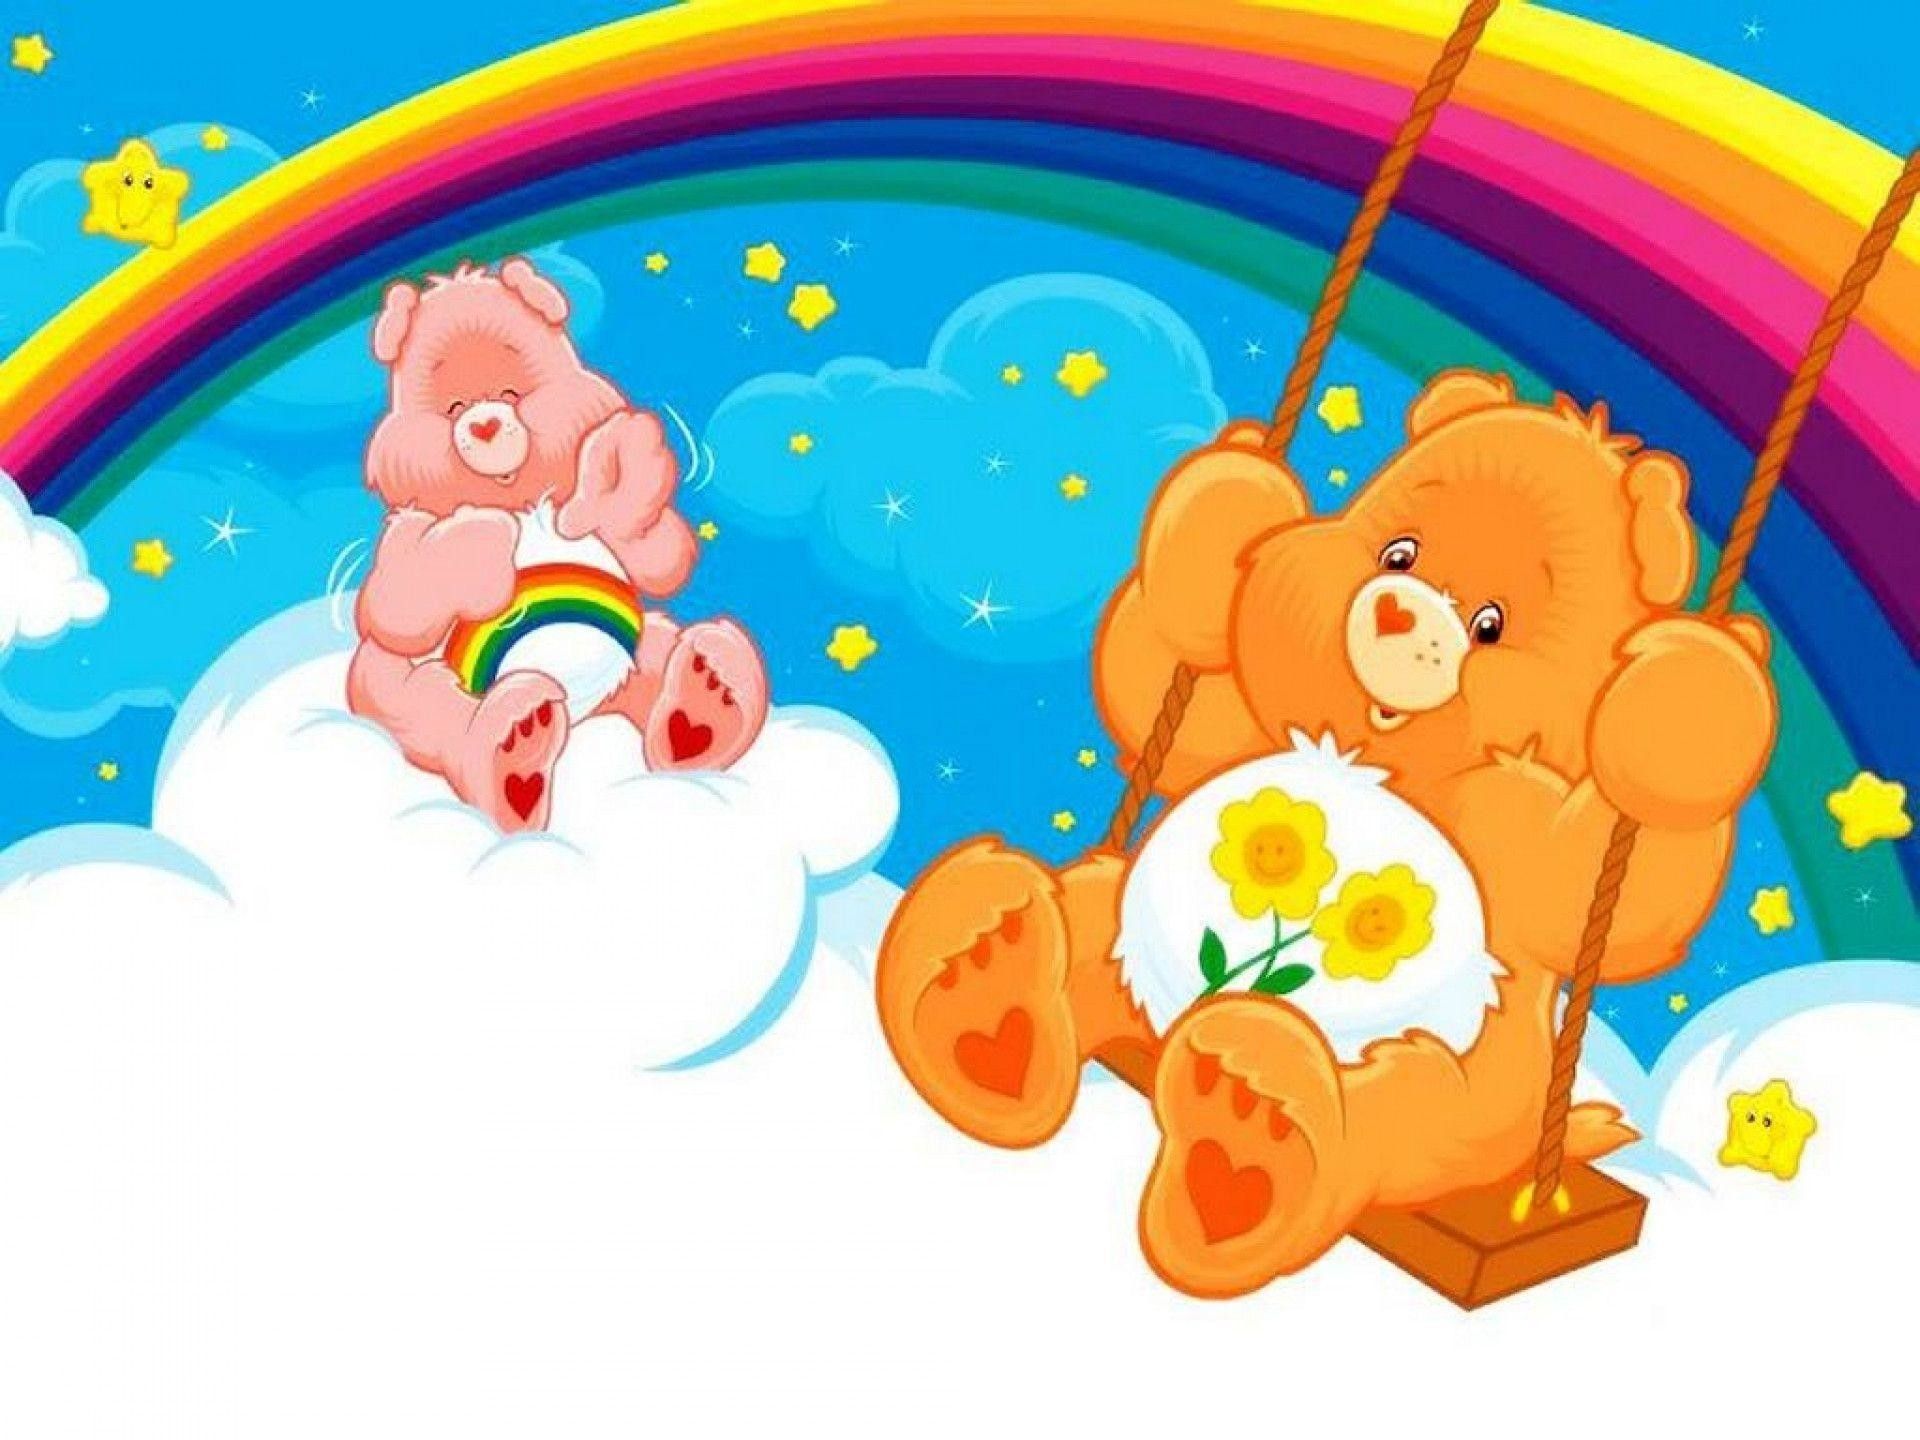 Care Bears swinging on a rainbow wallpaper - Care Bears